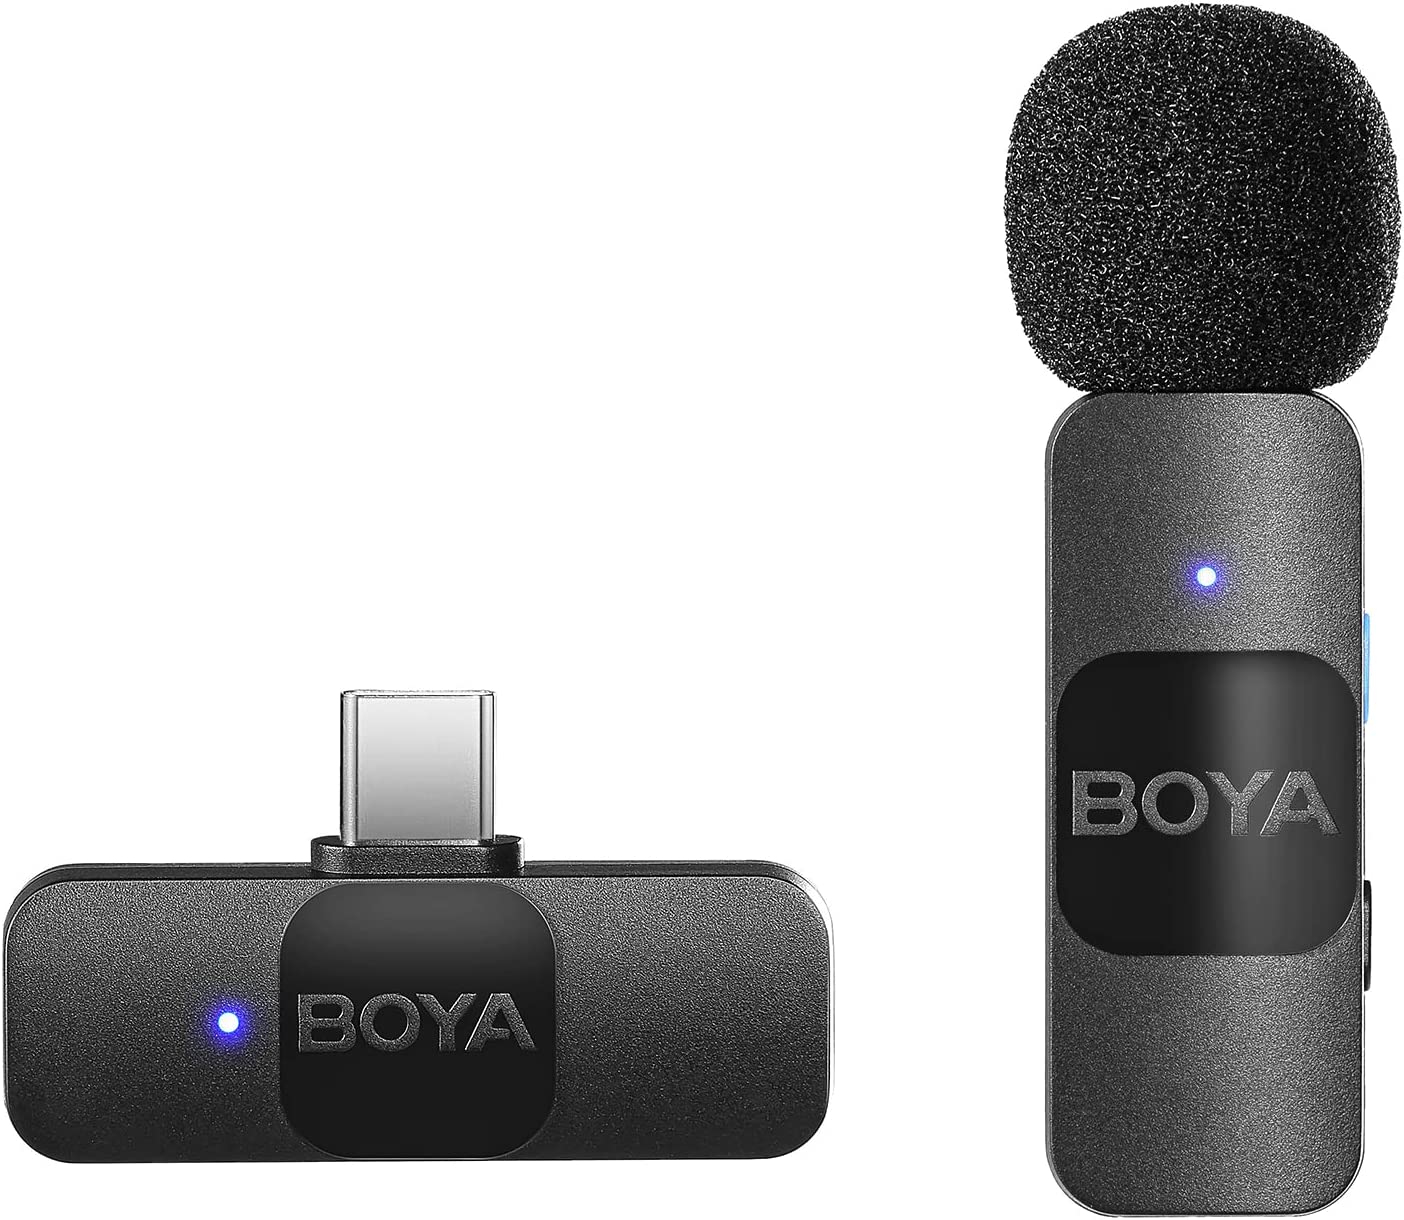 BOYA BY-V10 BOYA Wireless Lapel Microphone System, Omnidirectional USB ...